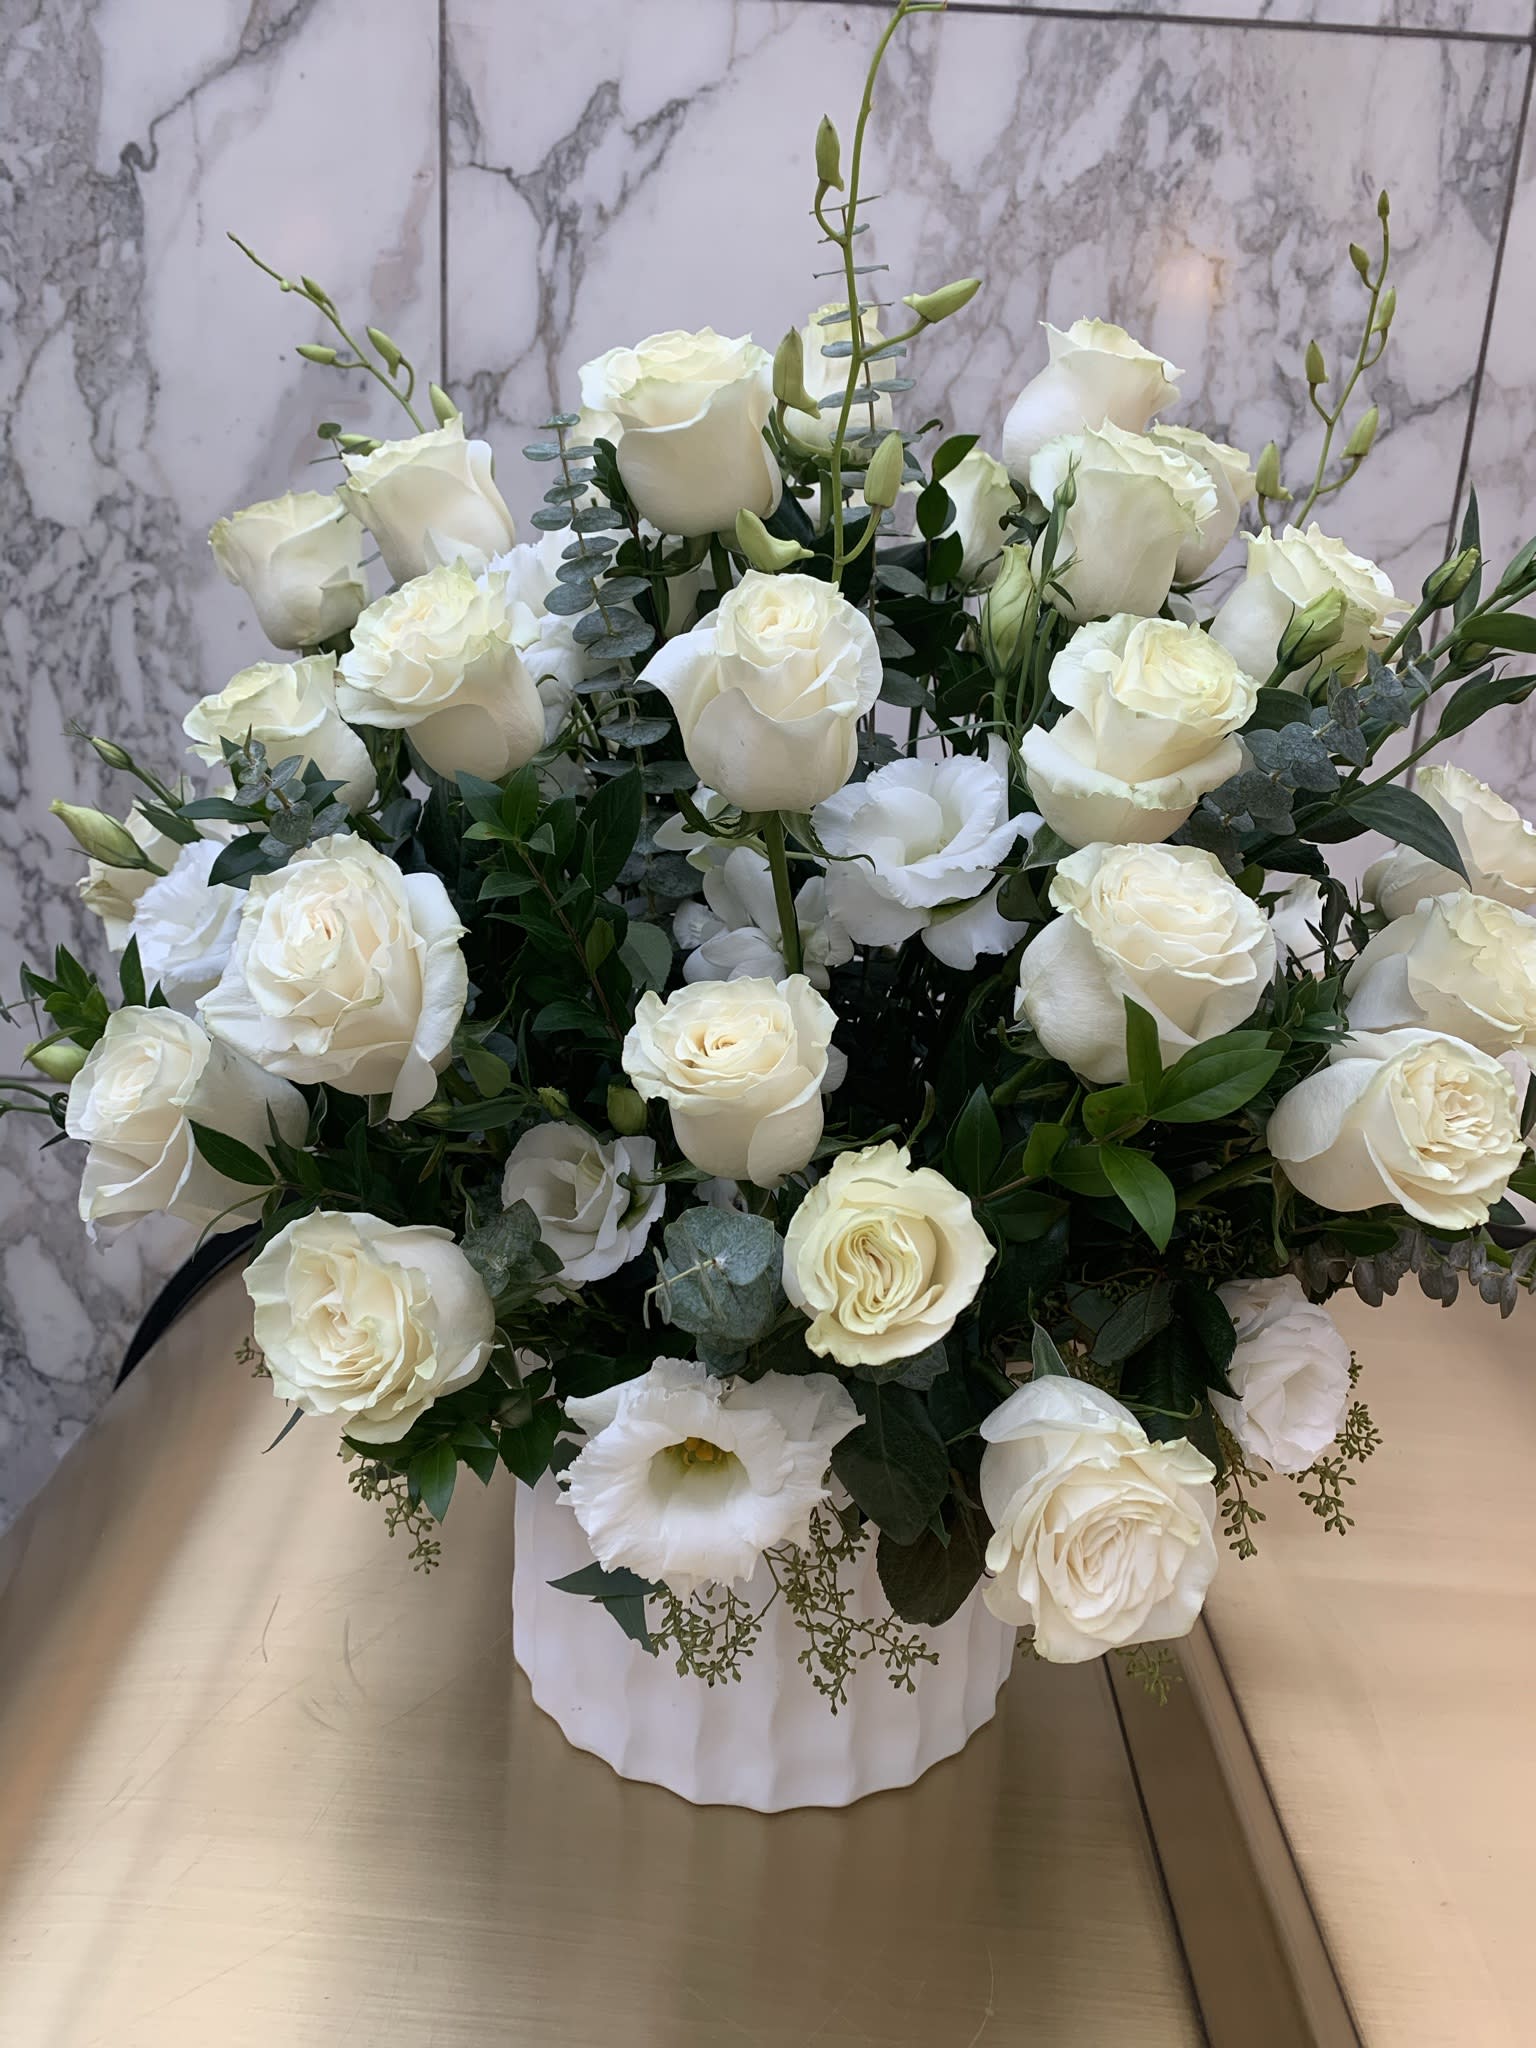 White arrangement  - 3 dozen roses in vase